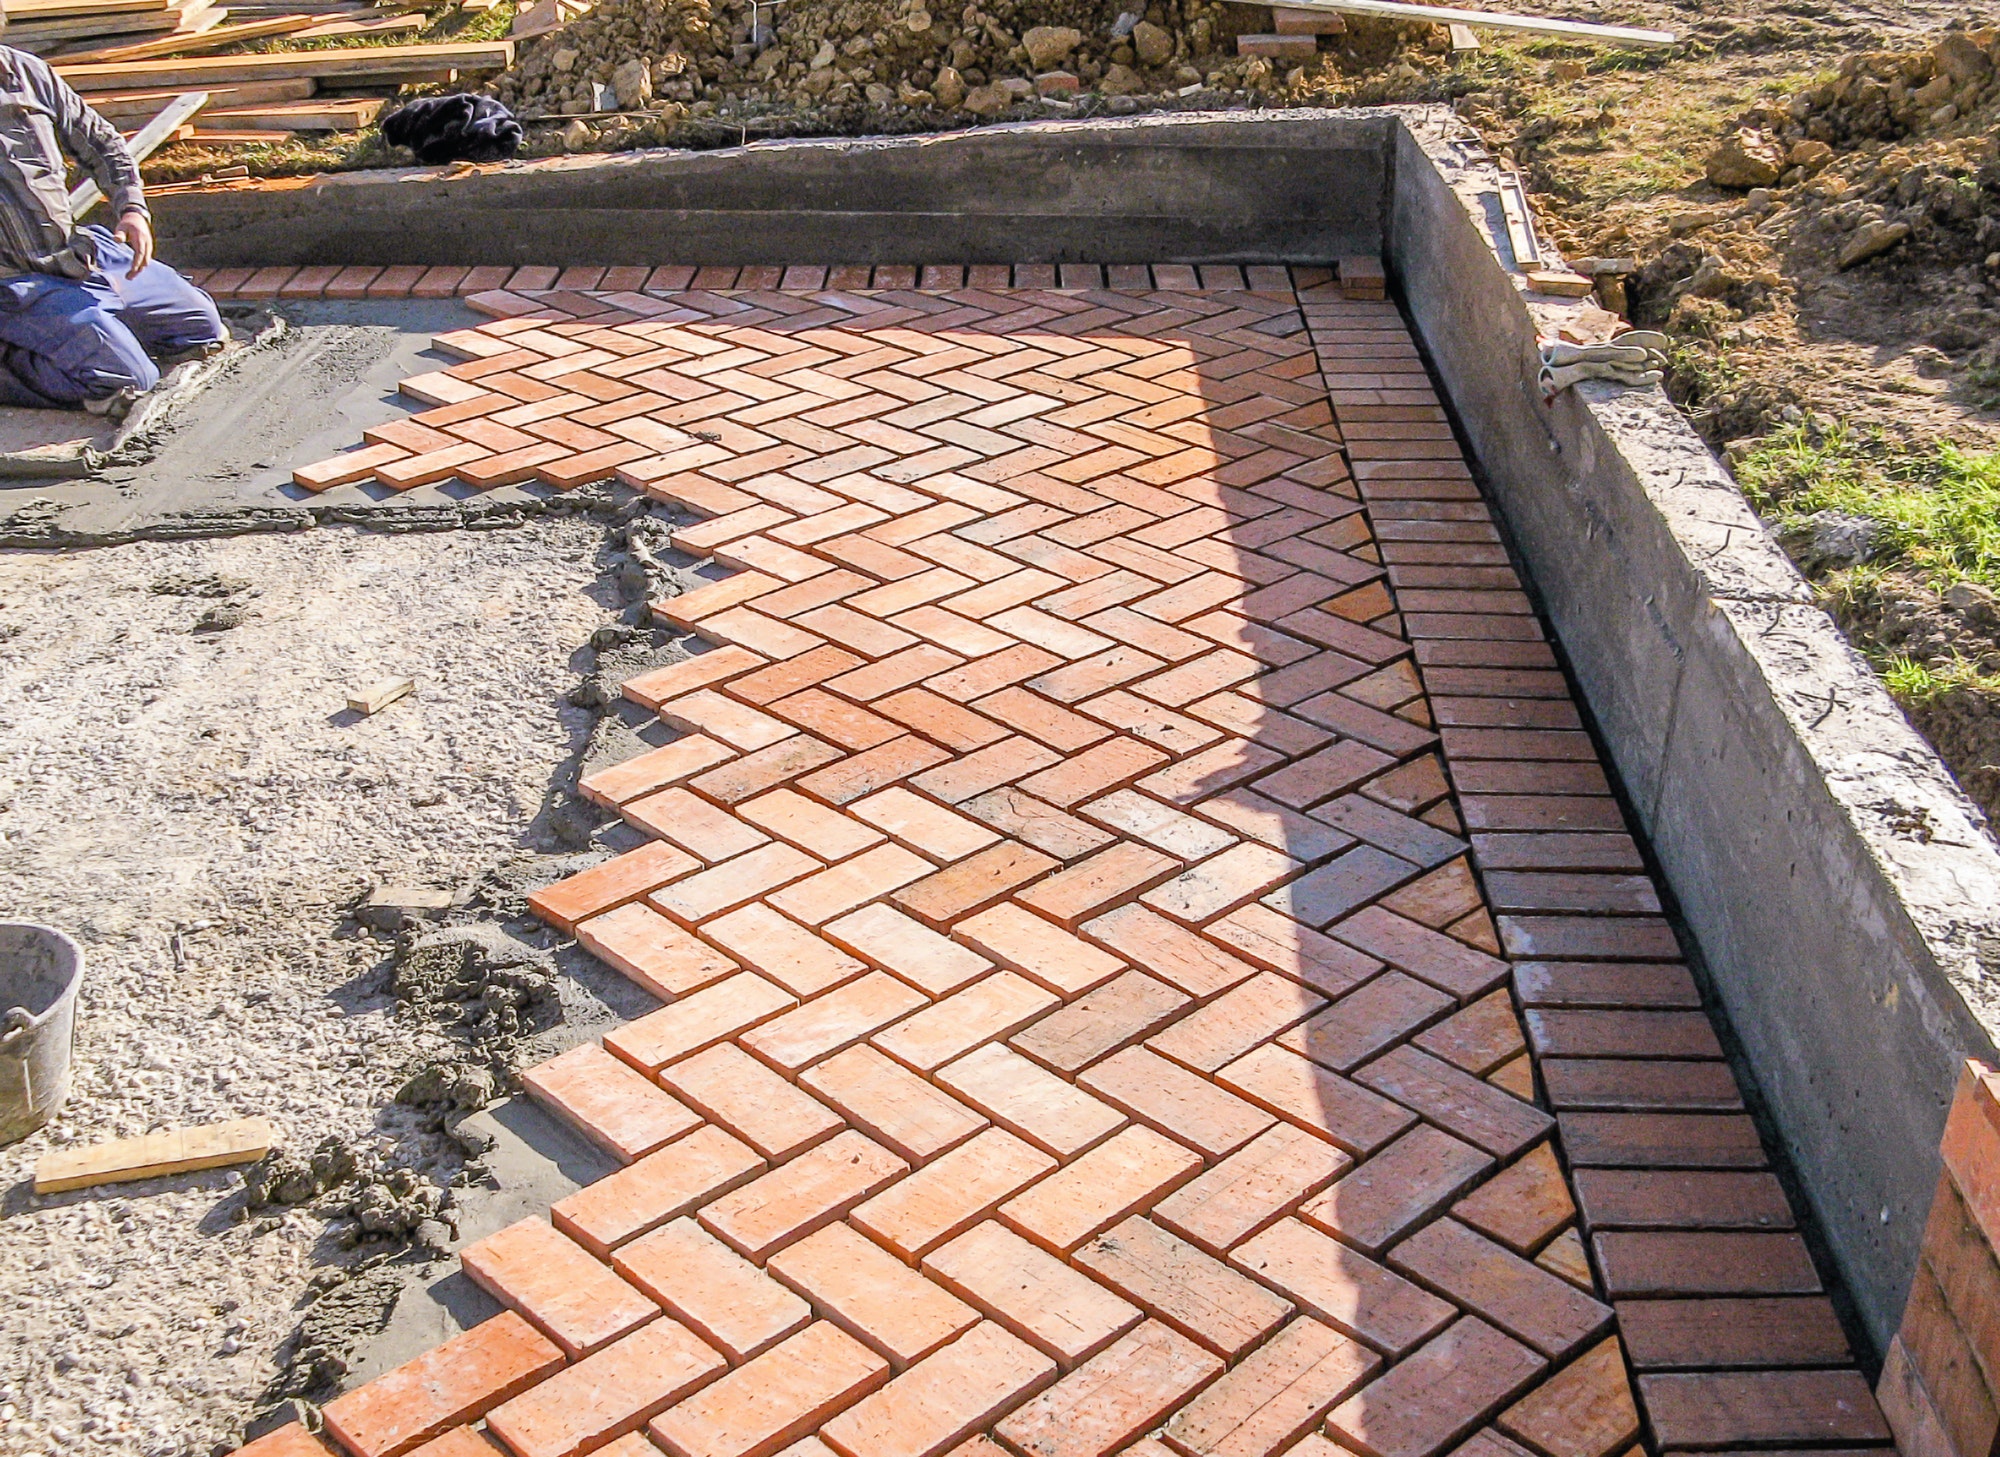 Orange brick paving stones in construction process